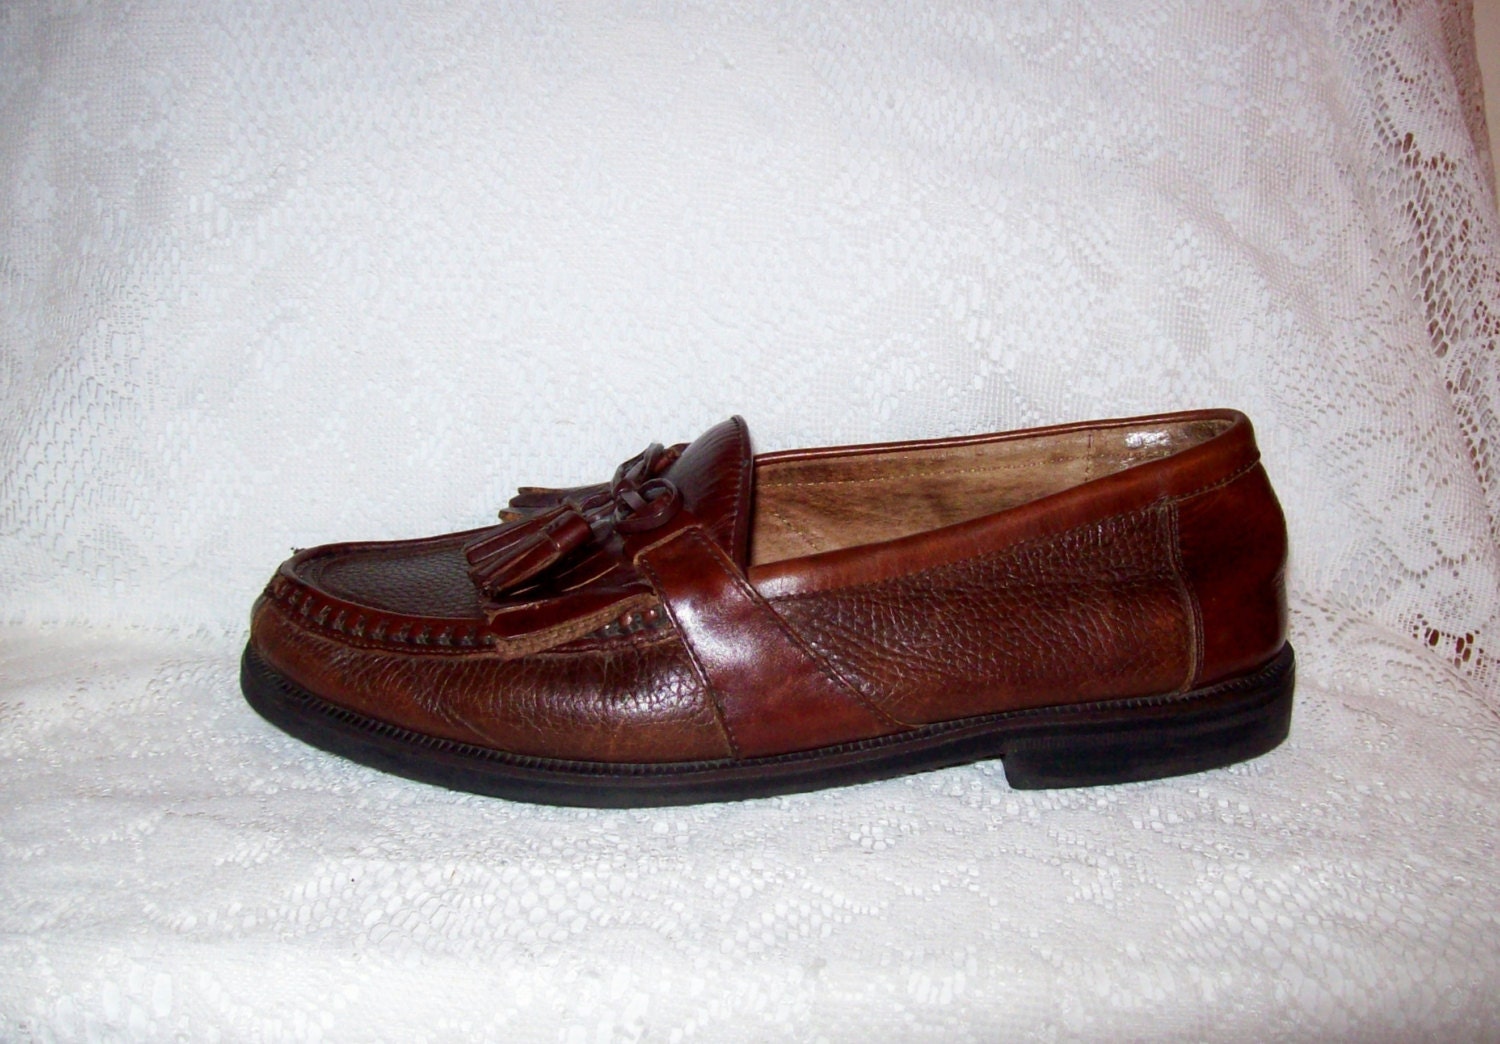 Vintage Men's Brown Leather Tassel Loafers by Florsheim